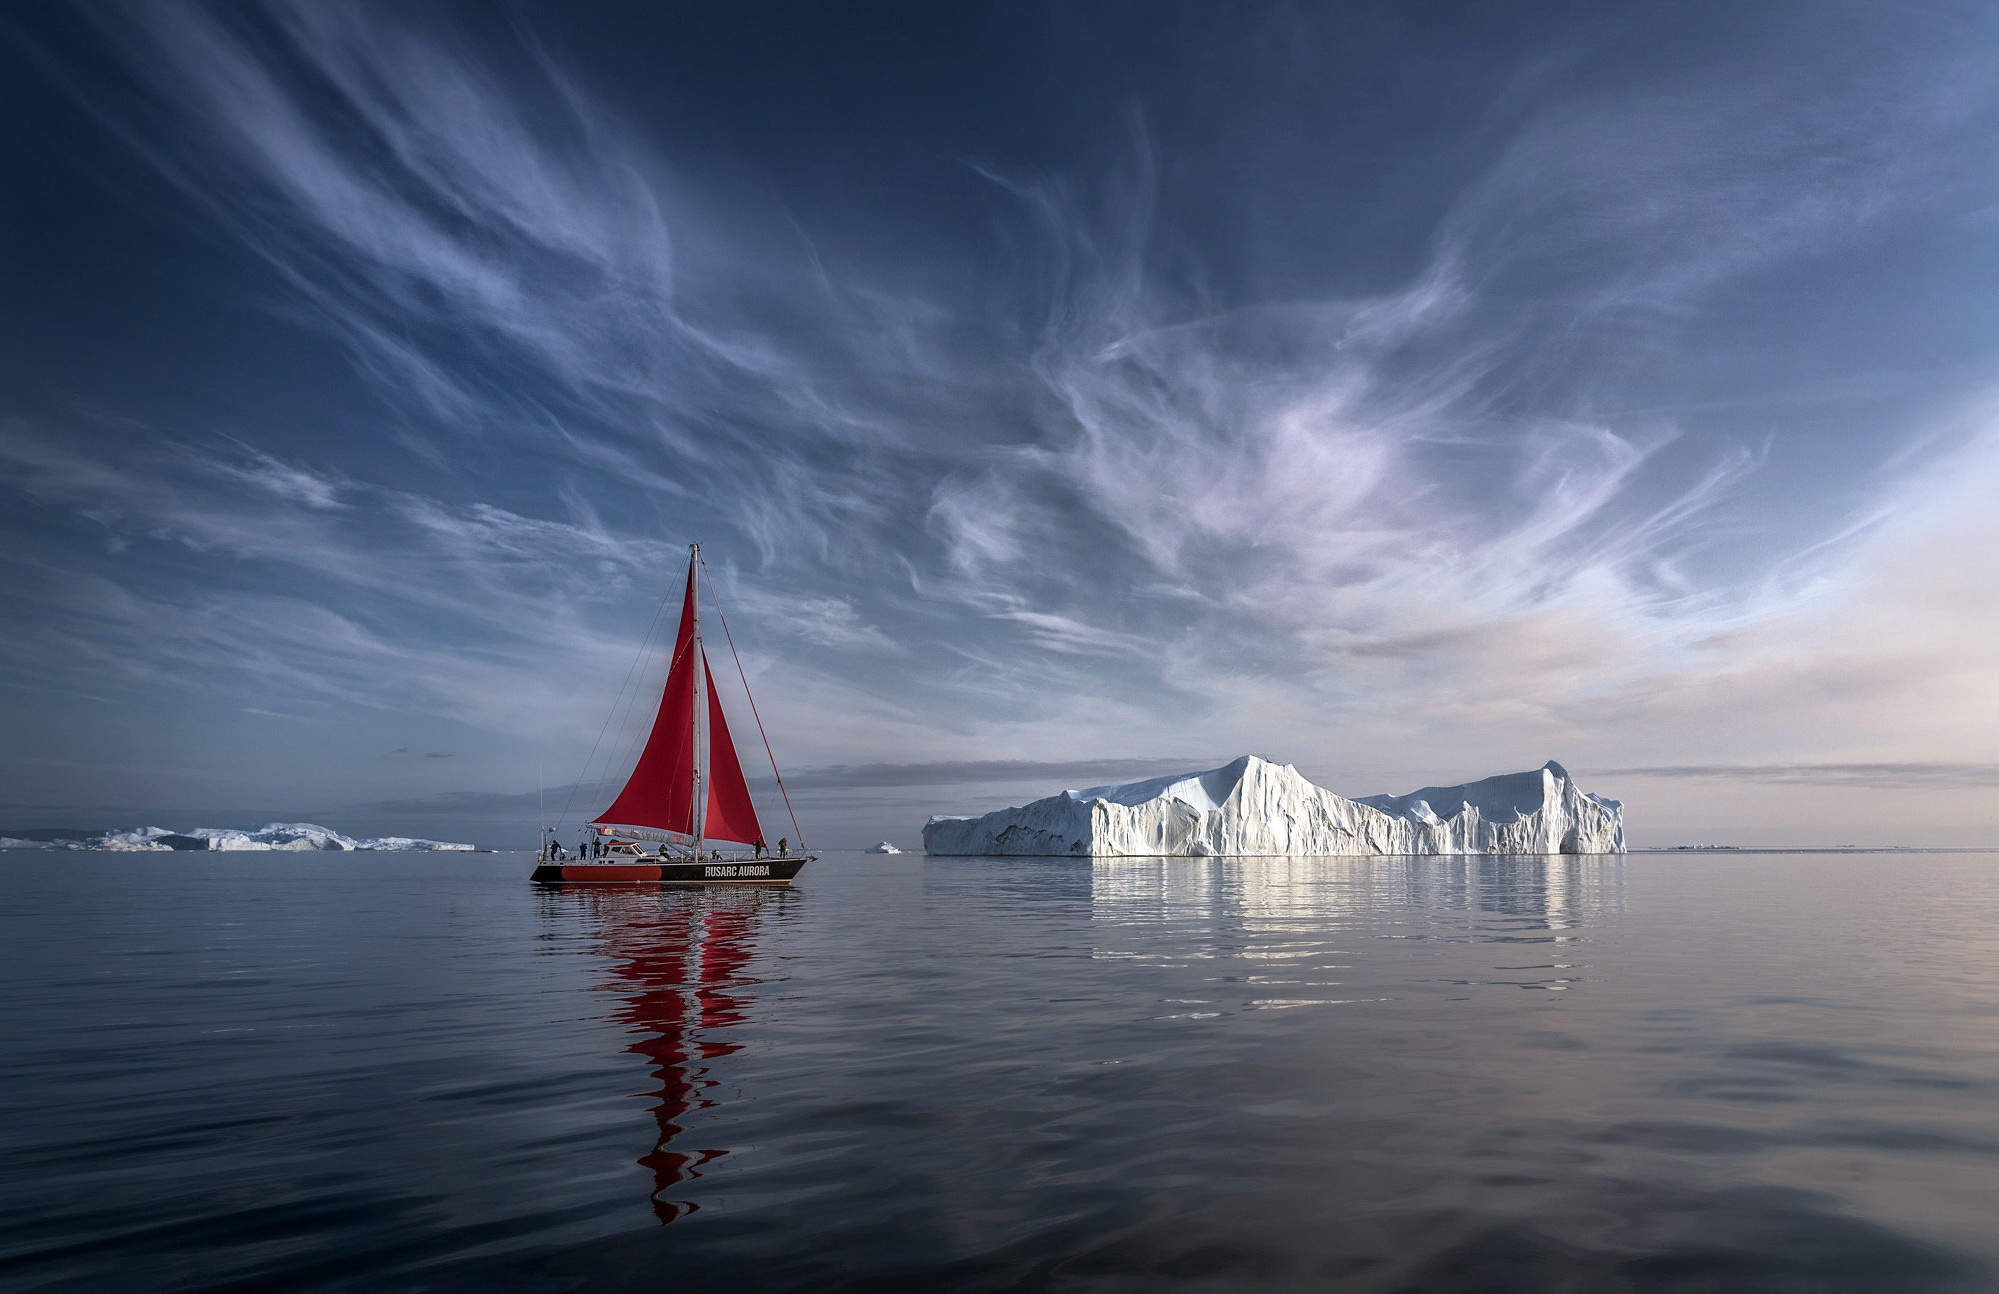 General 1999x1294 nature outdoors iceberg Arctic boat vehicle sailing